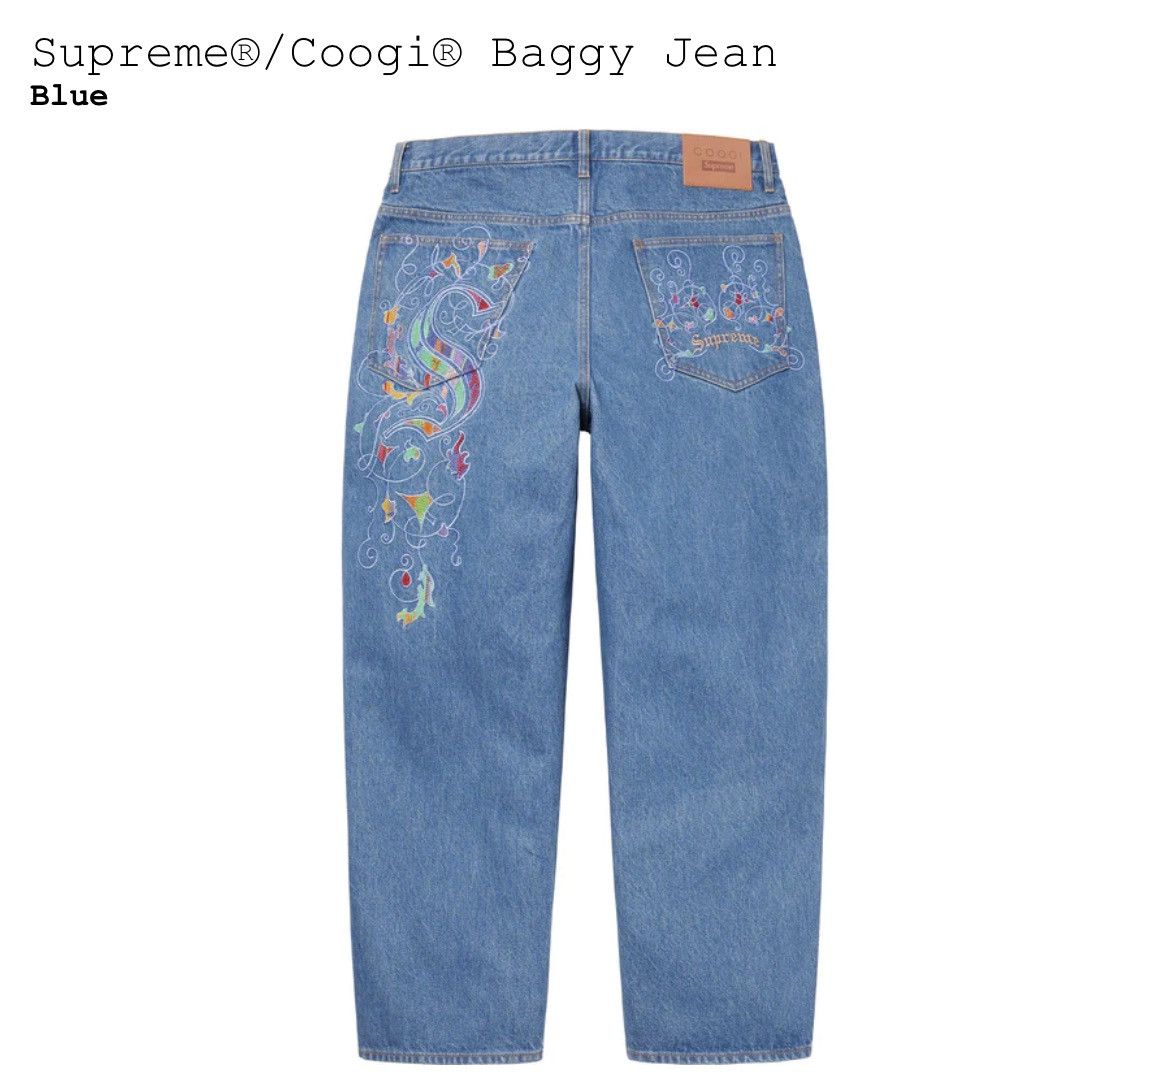 Supreme Baggy Jean 30 | Grailed